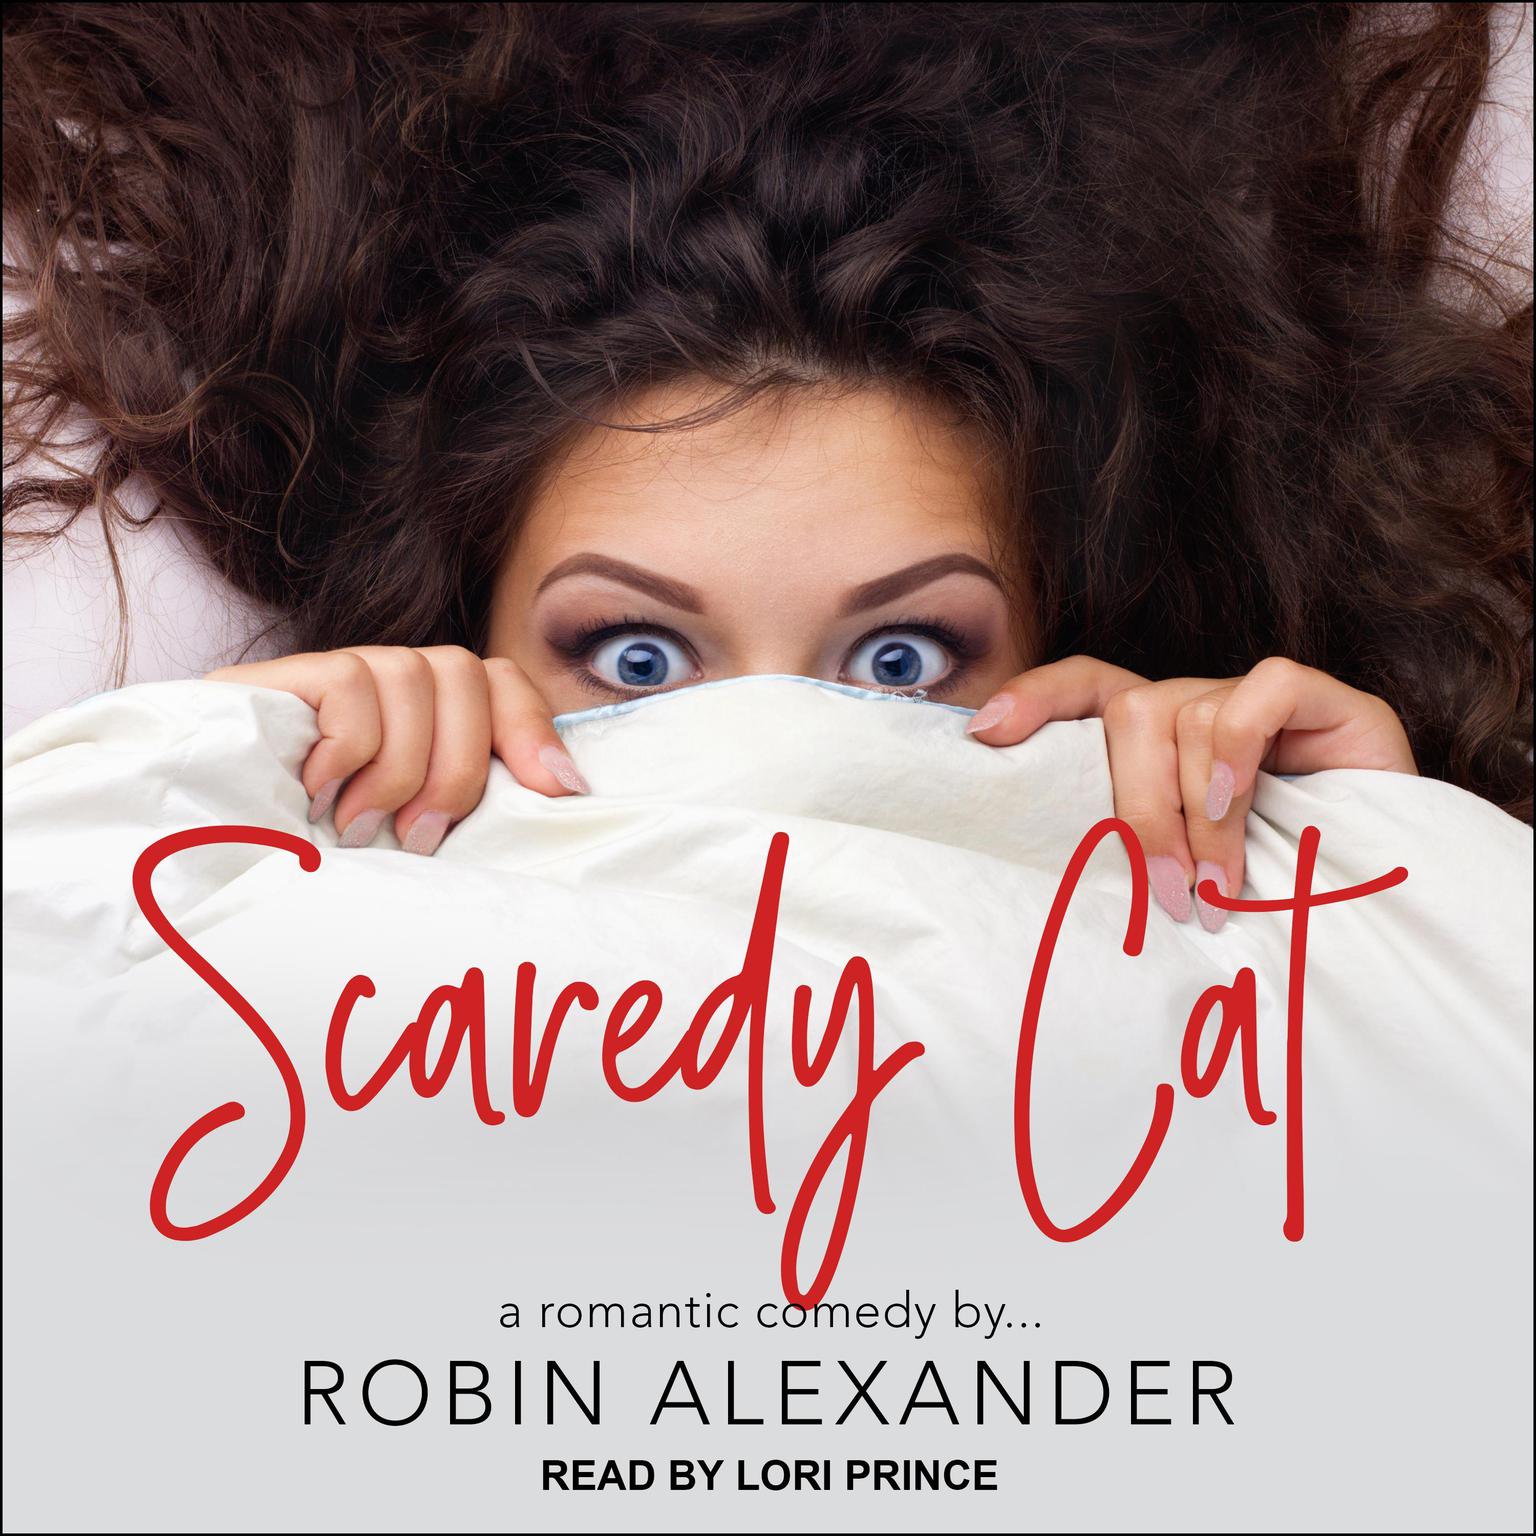 Robin Alexander, Lori Prince: Scaredy Cat (AudiobookFormat, 2022, Tantor Audio)